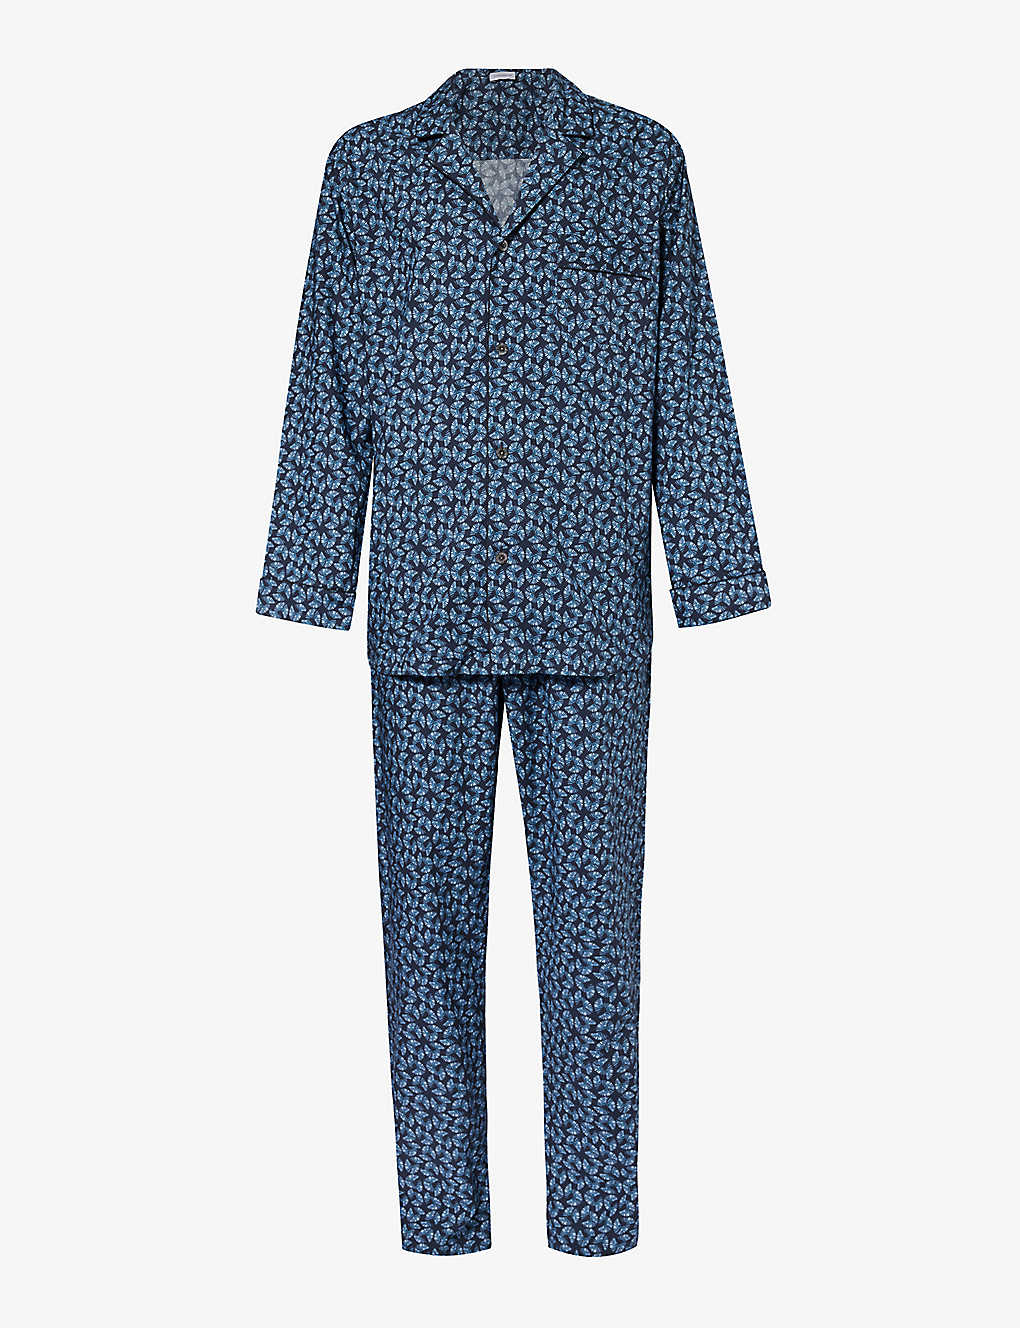 Zimmerli Mens Blue 474 Branded-buttons Graphic-design Cotton-poplin Pyjamas